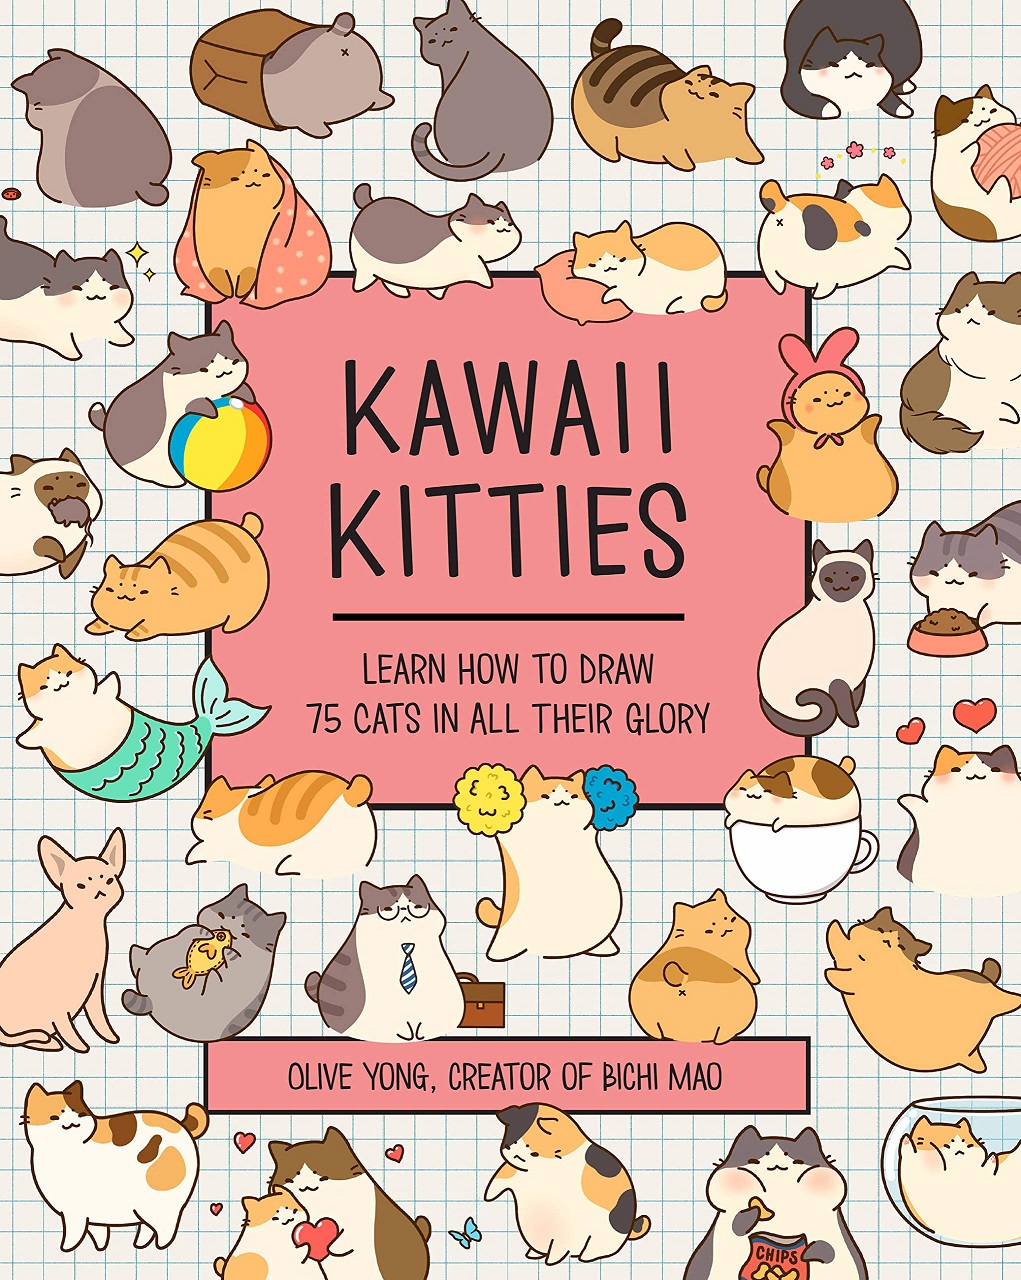 Smith - Drawing Chibi: Learn How to Draw Kawaii People, Animals